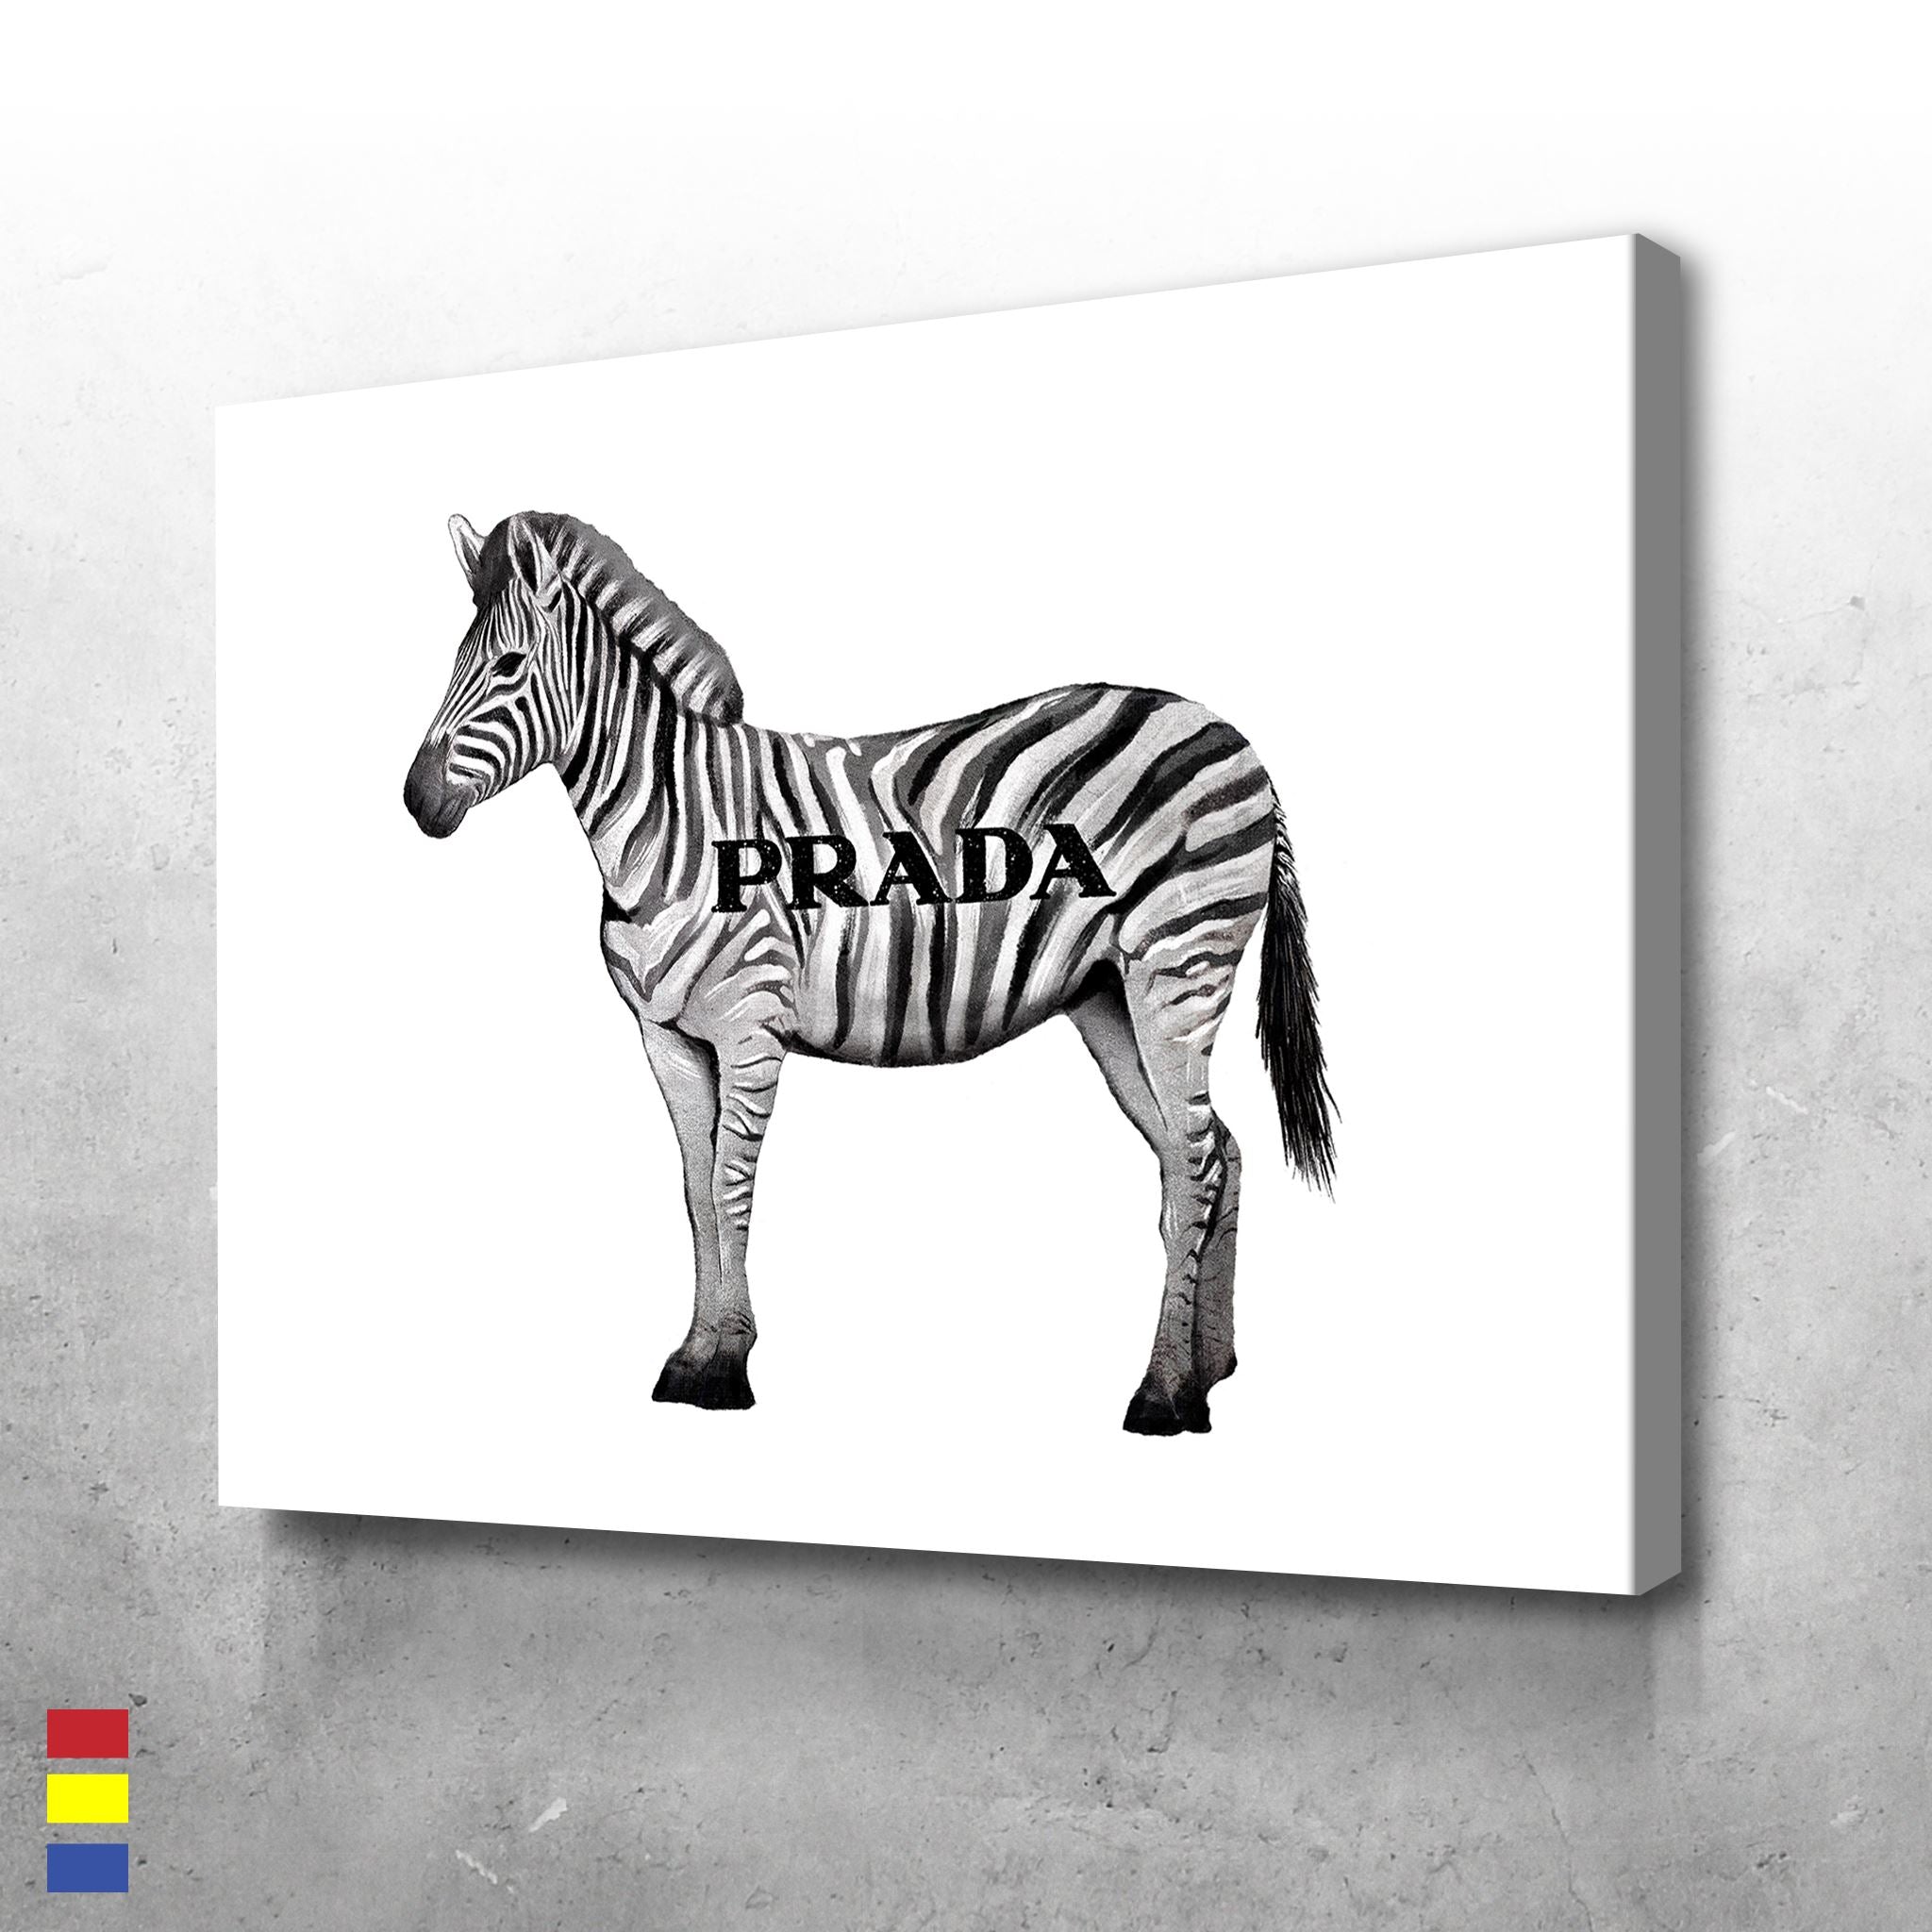 Prada Zebra